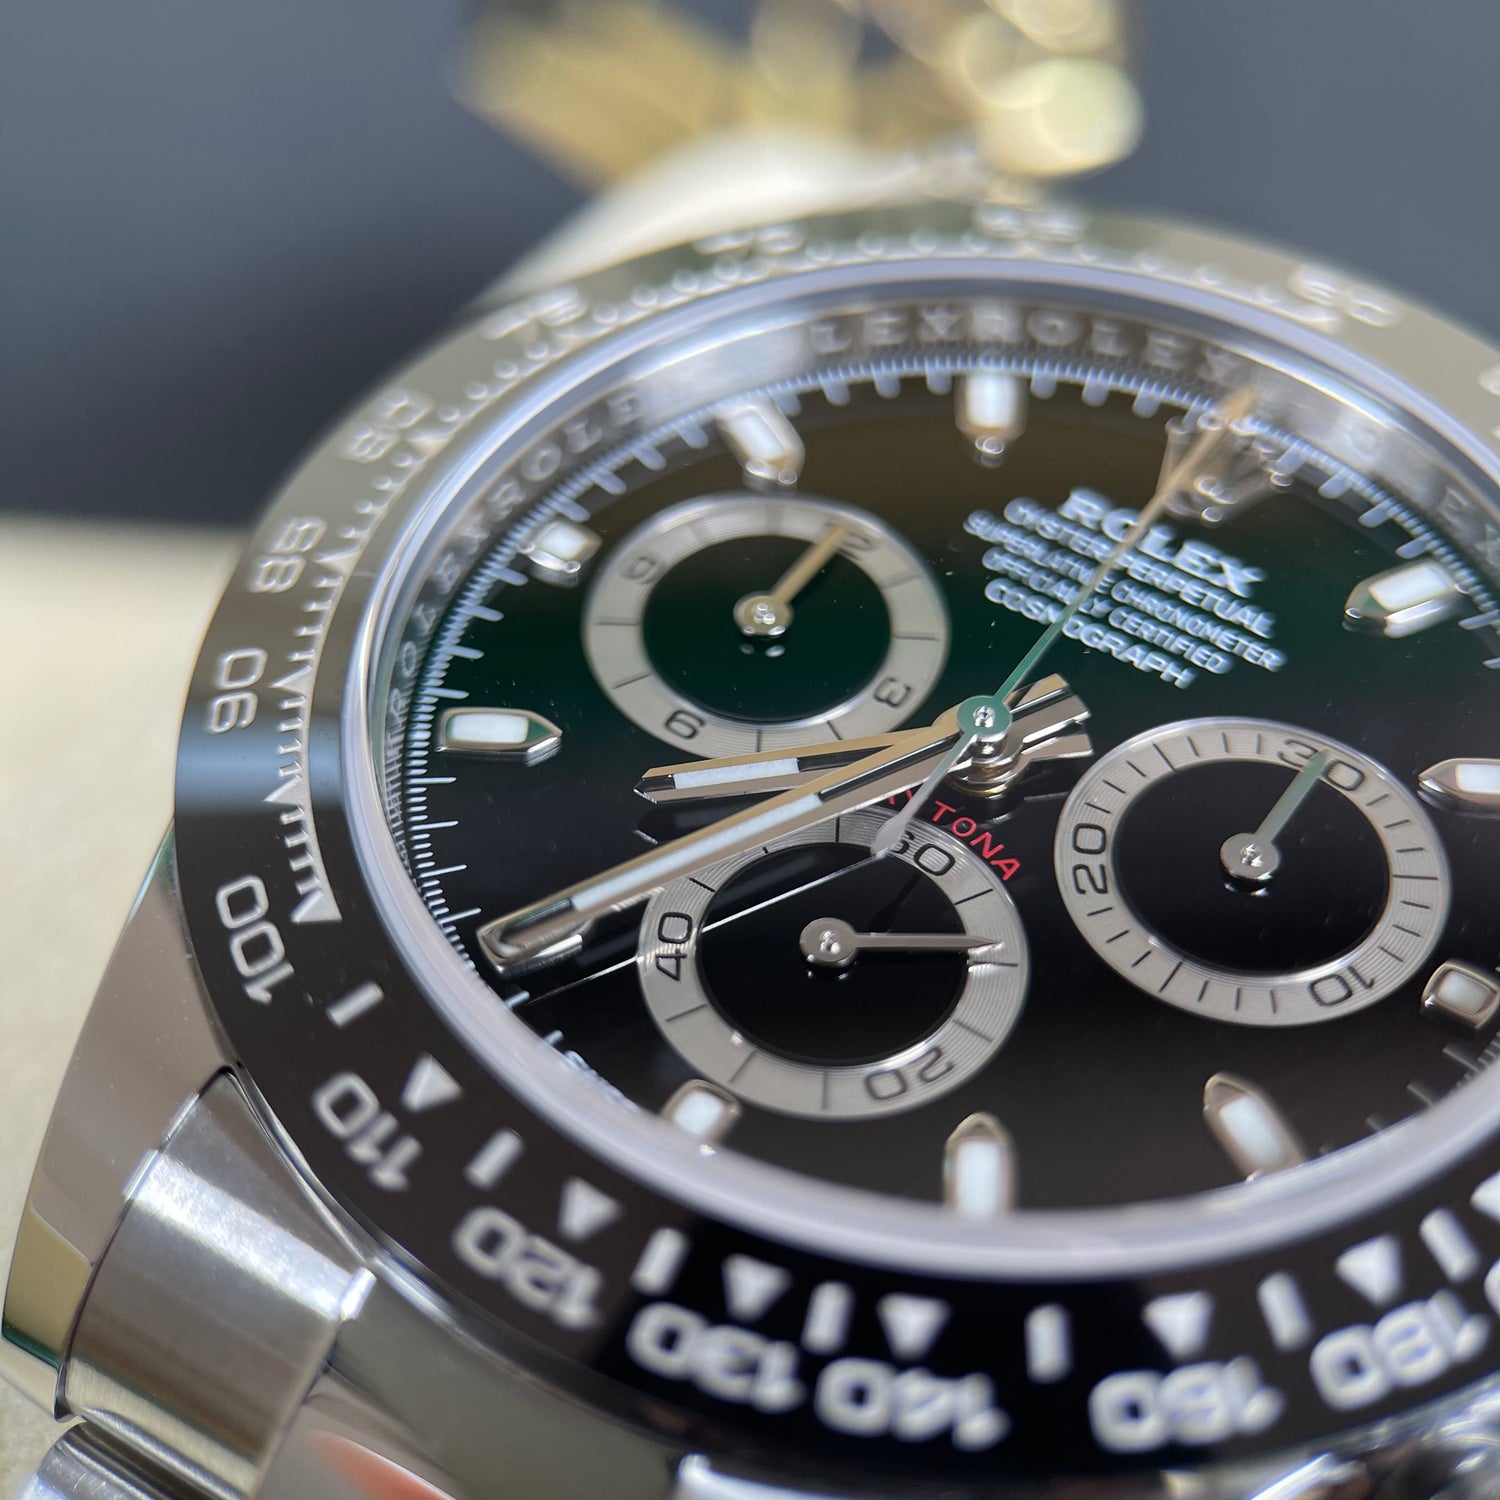 Rolex Cosmograph Daytona Ceramic Black Dial 116500LN 2021 Brand New Watch